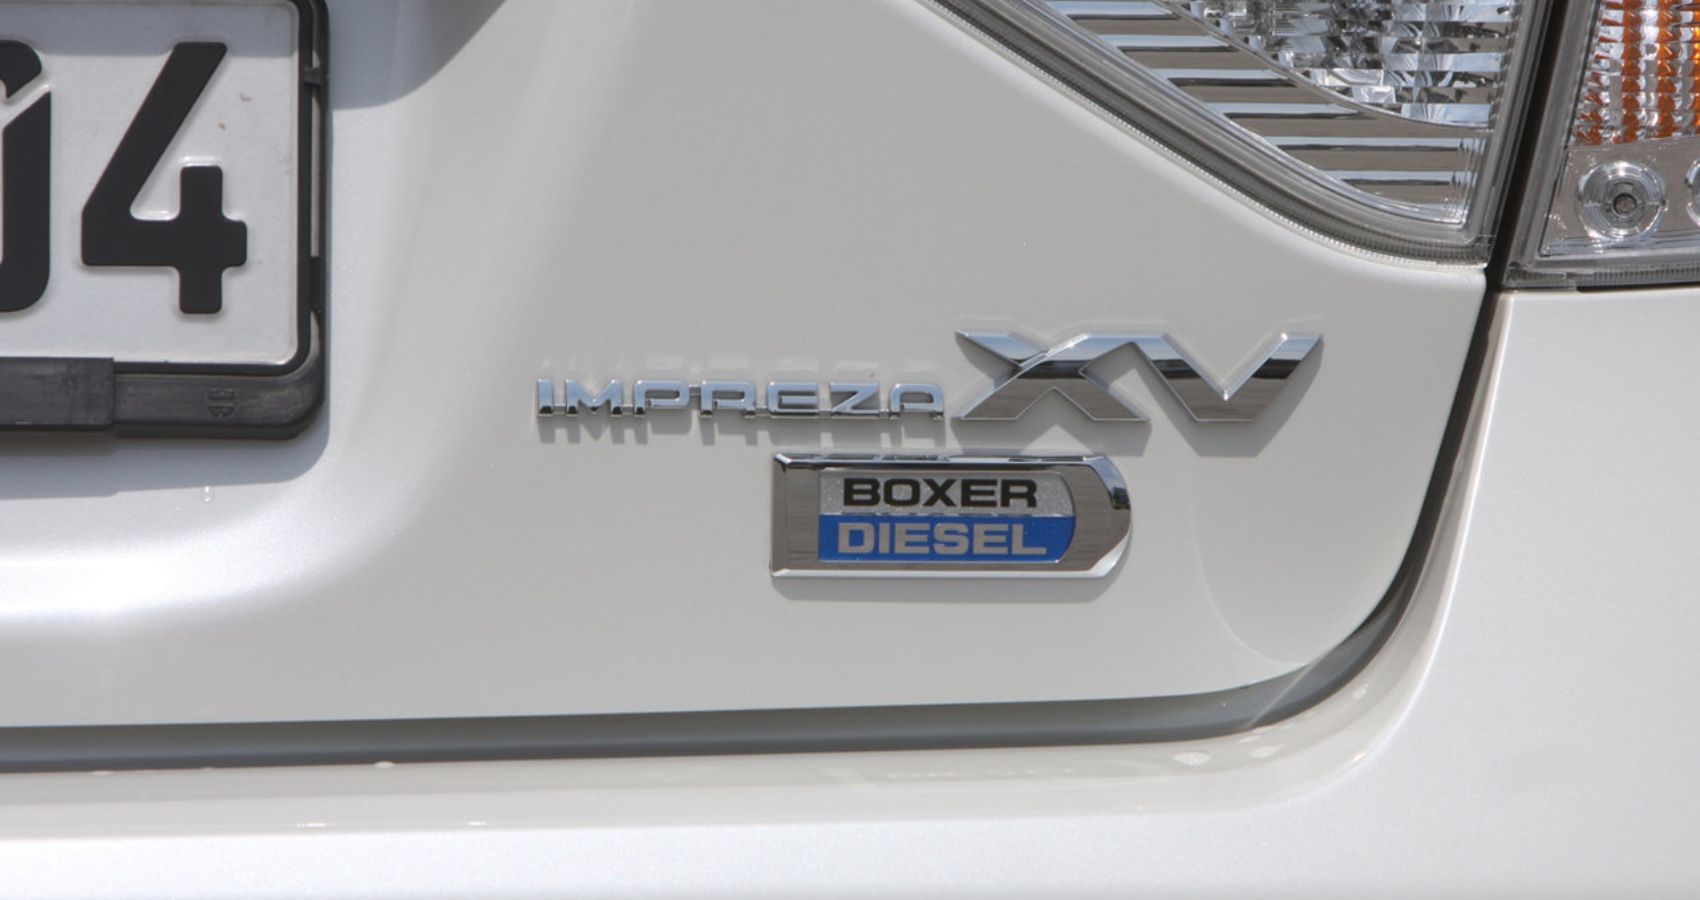 Why The Subaru 2.0-Liter EE20 Boxer Diesel Engine Was A Bad Idea